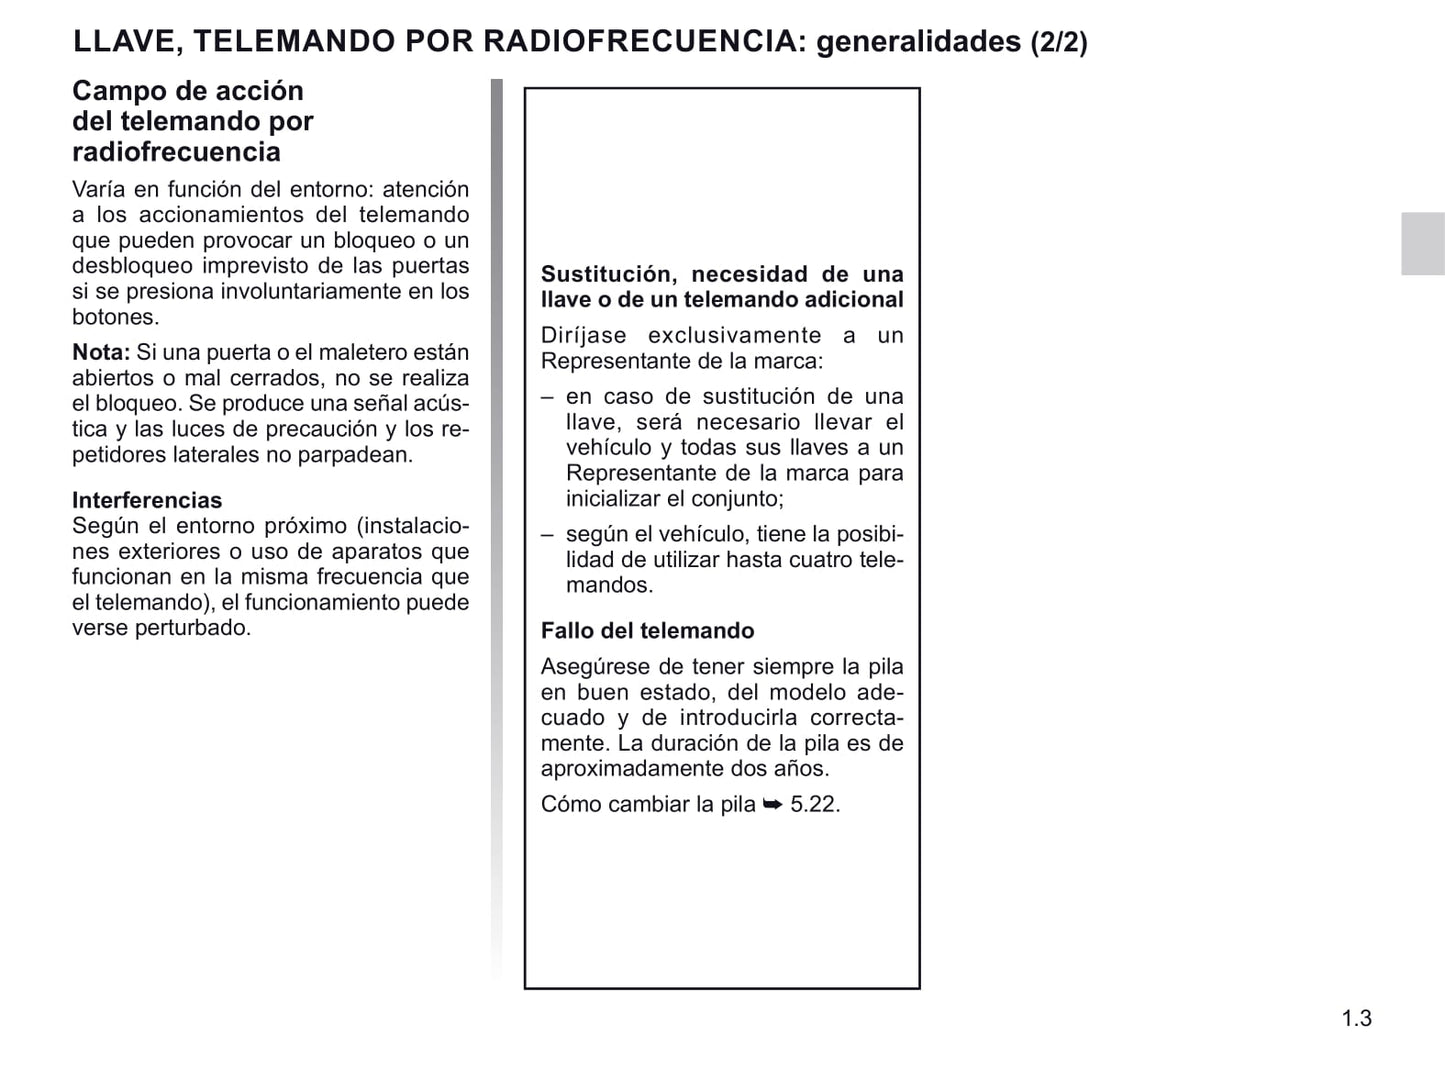 2020-2021 Renault Captur Gebruikershandleiding | Spaans